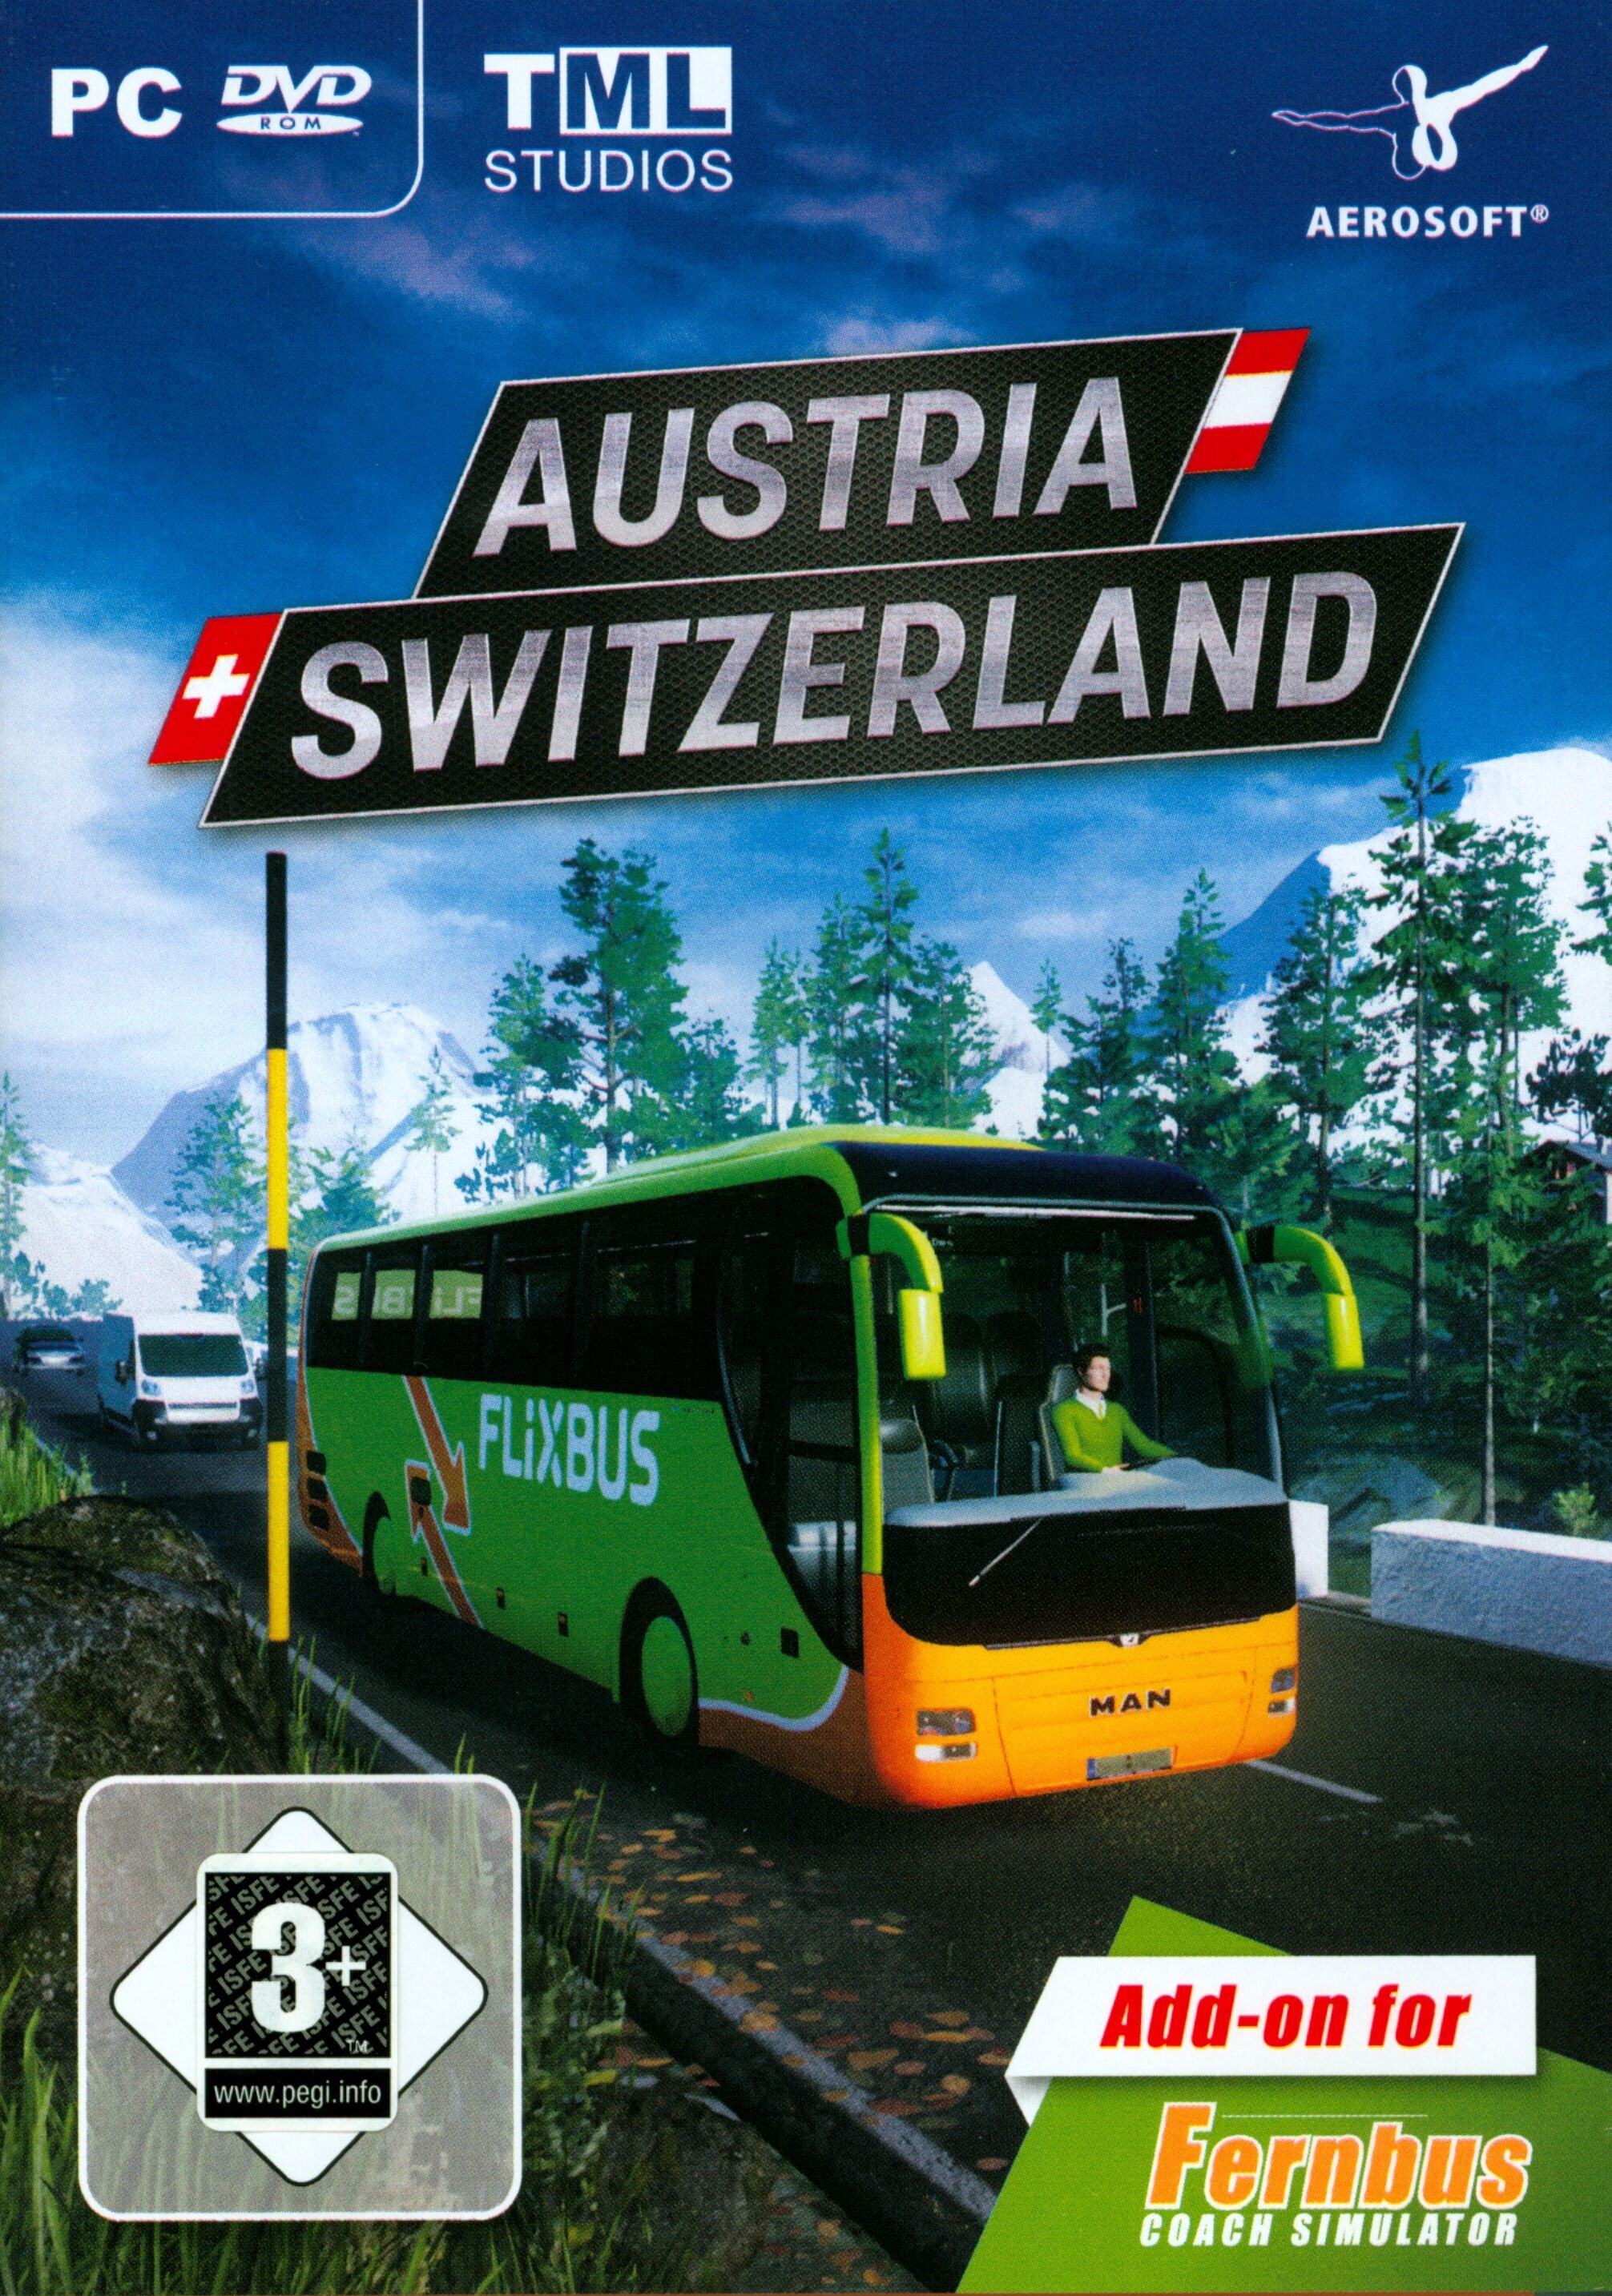 Aerosoft - Fernbus Simulator - Austria/Switzerland [Add-On] [DVD] [PC] (D/E)